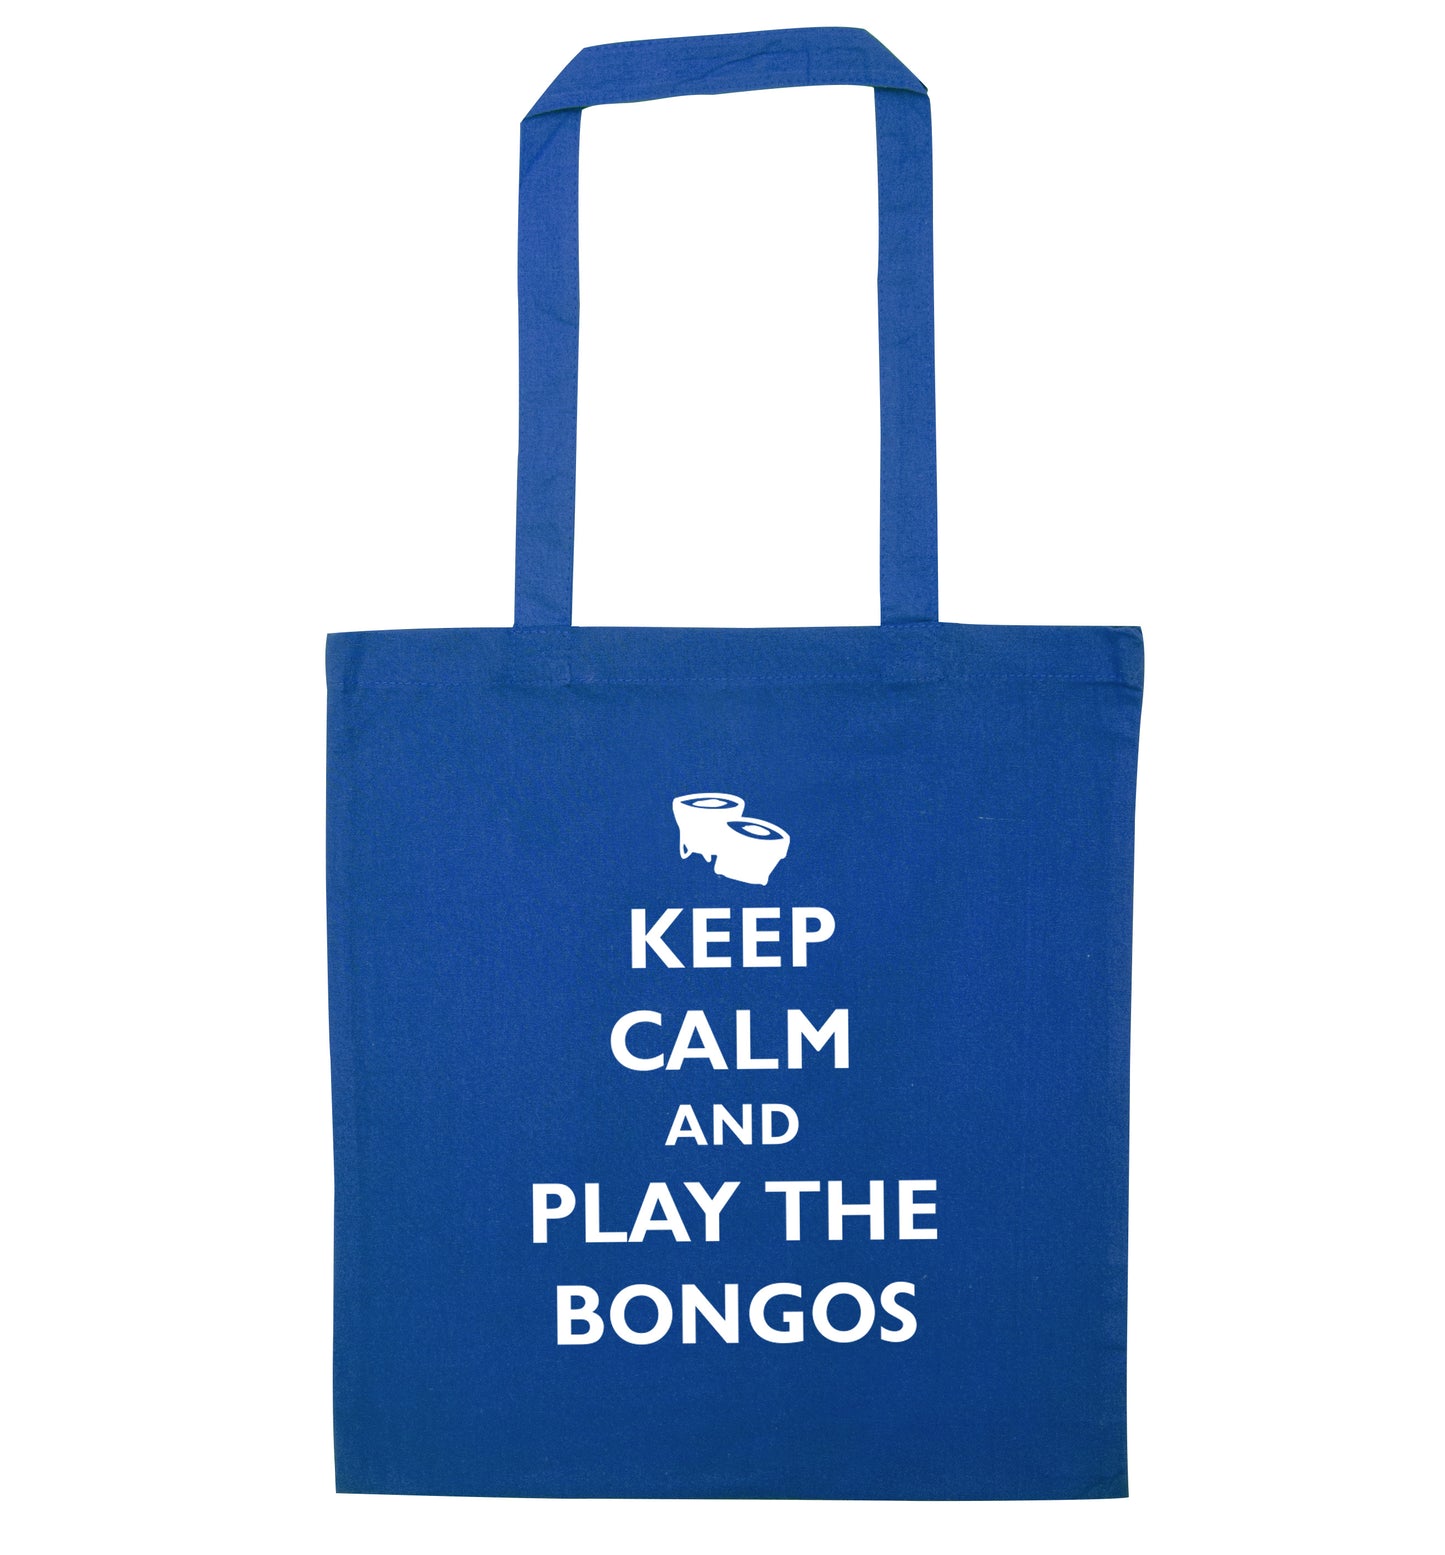 Keep calm and play the bongos blue tote bag